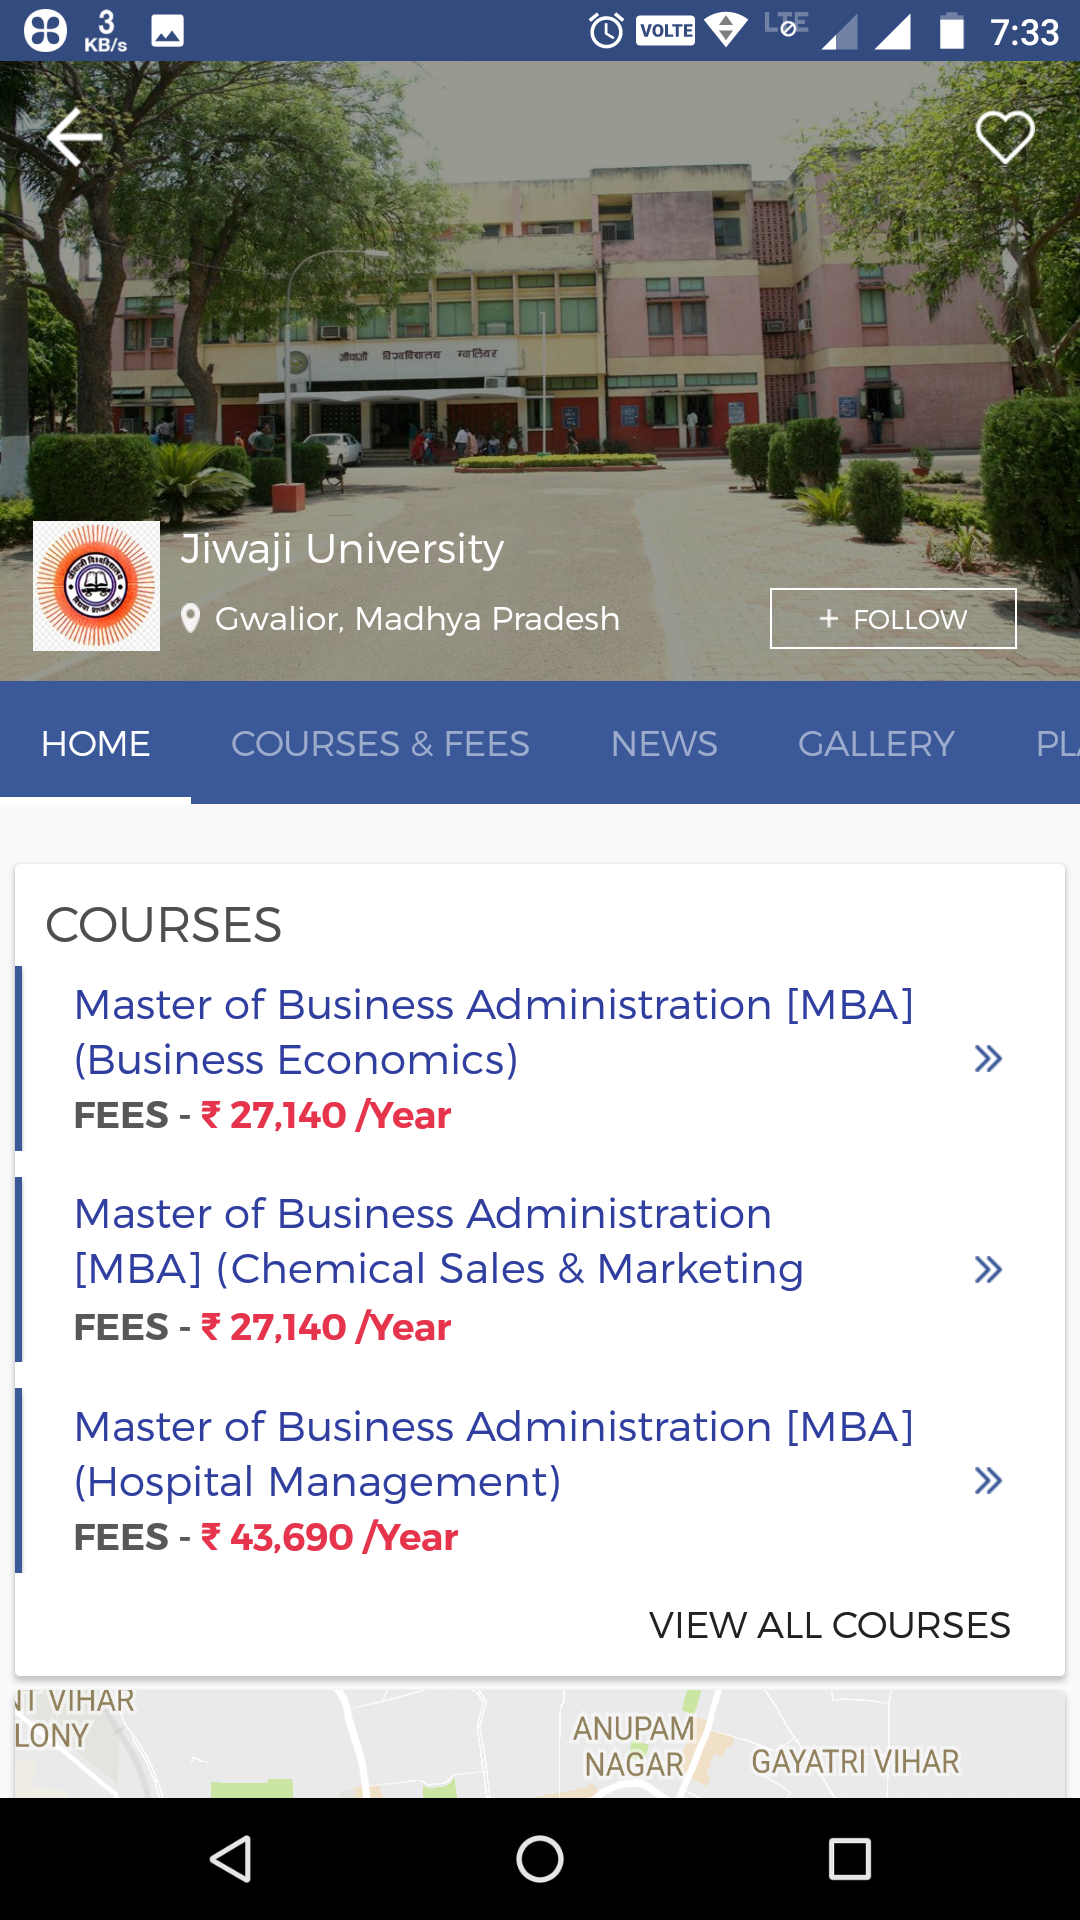 Jiwali-University-collegedunia